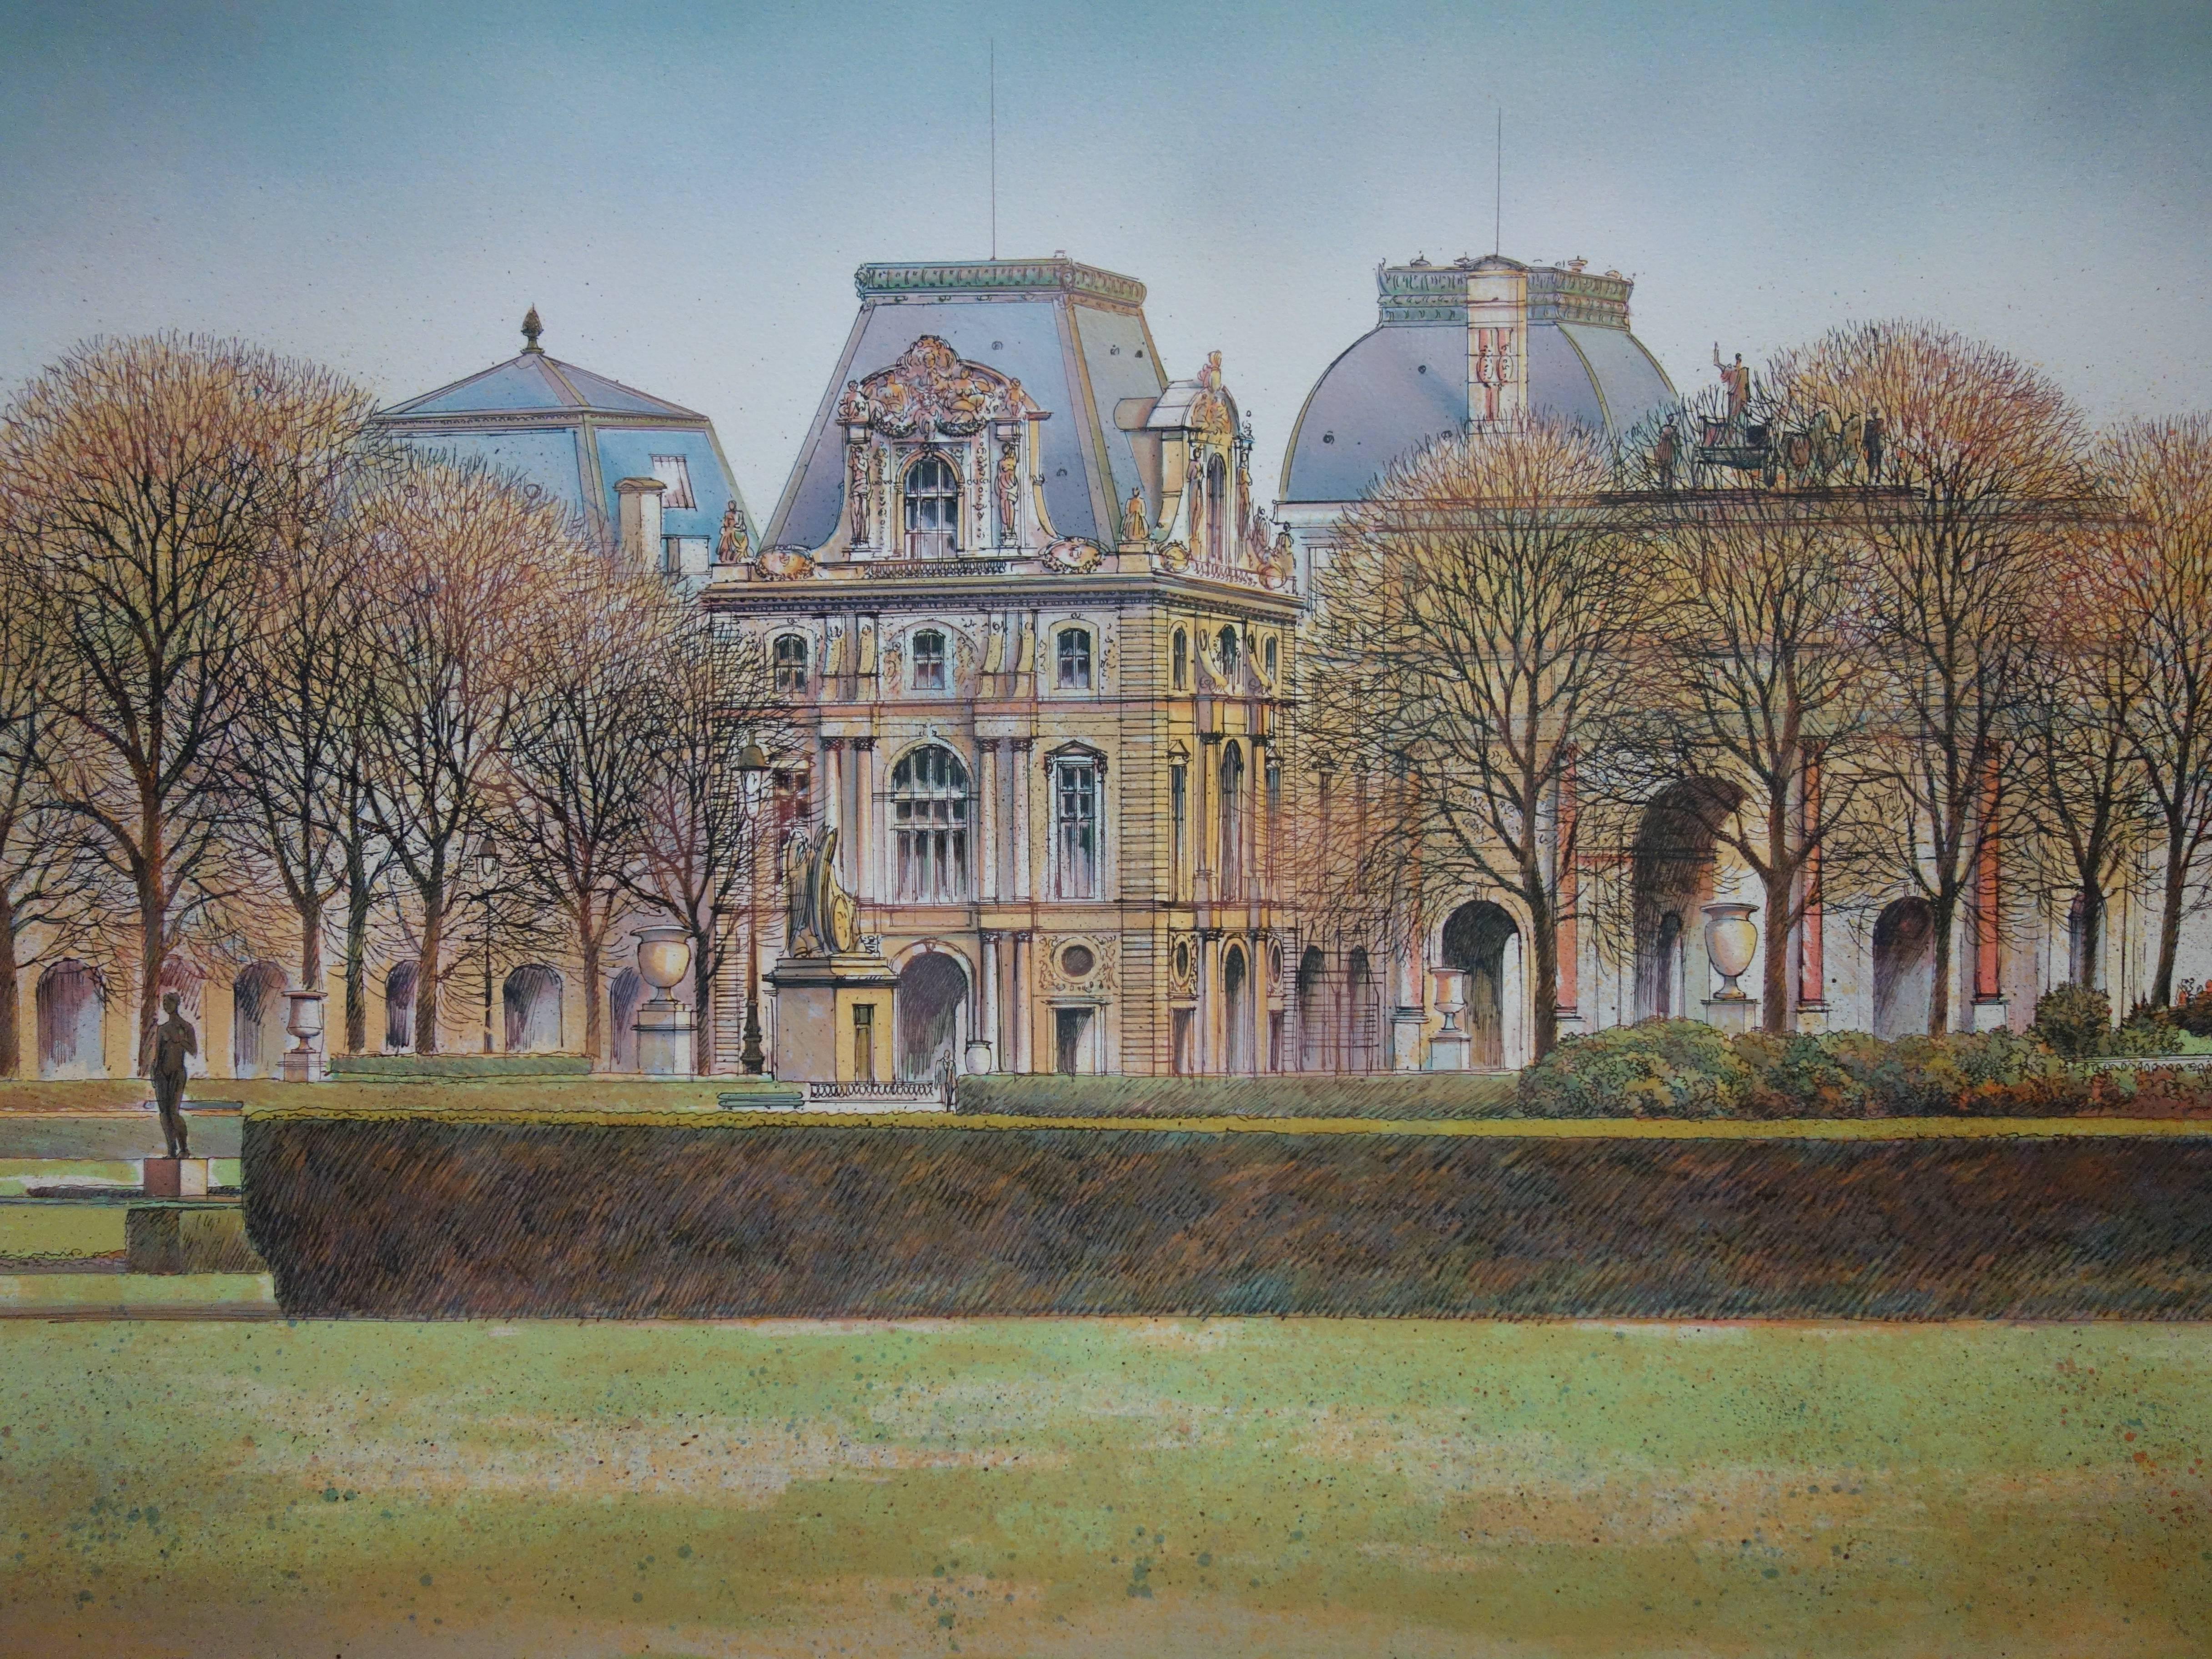 Paris : Louvre Museum - Original handsigned lithograph - 275ex - Gray Landscape Print by Rolf RAFFLEWSKI